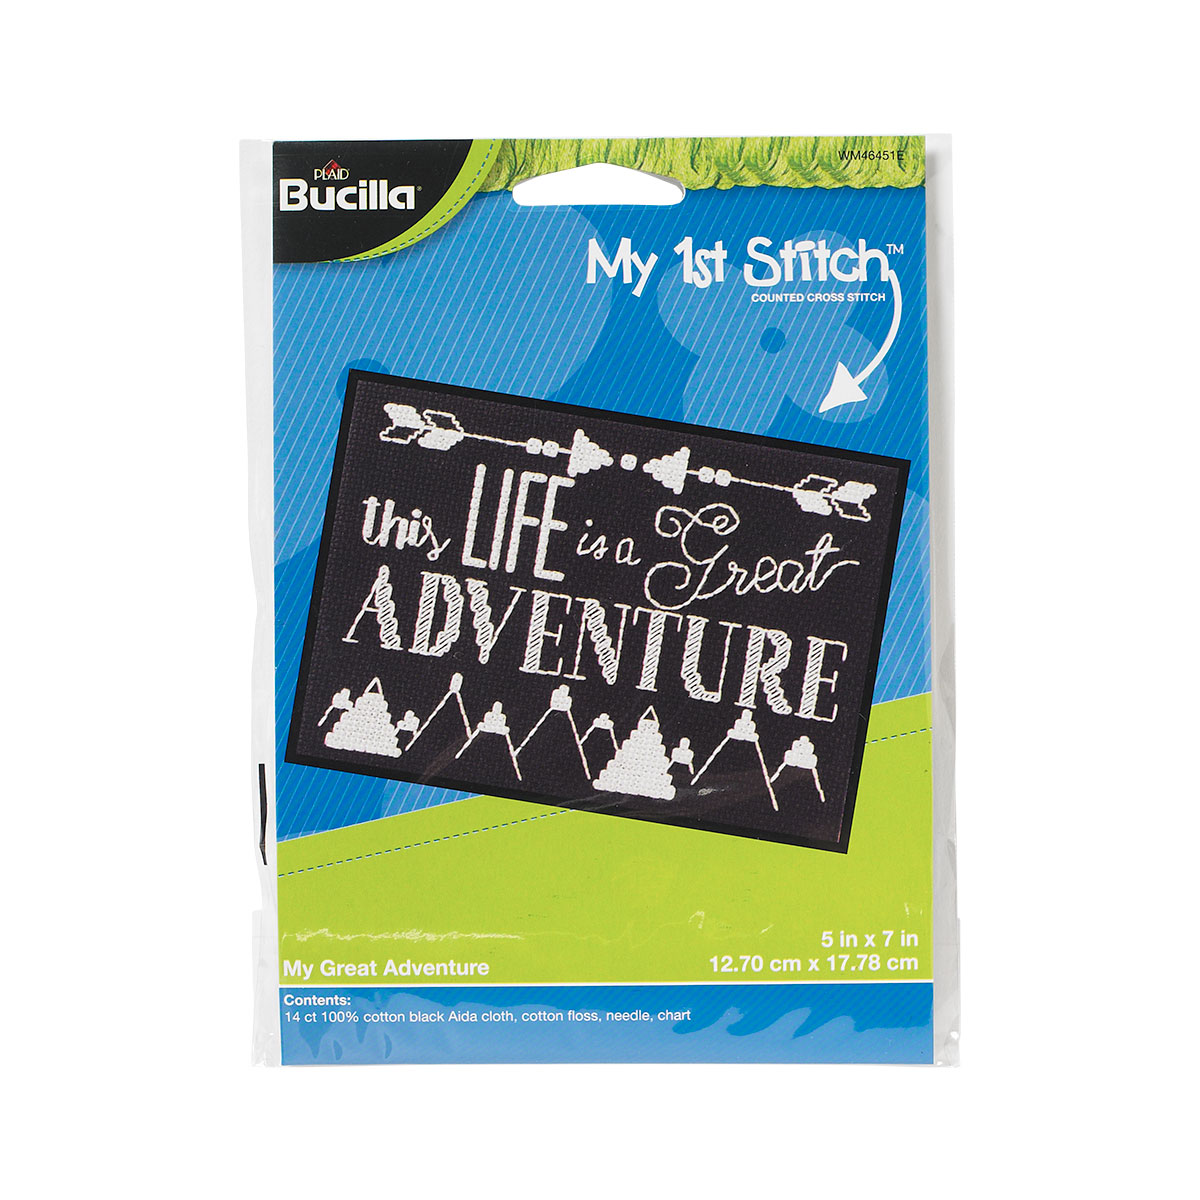 Bucilla ® My 1st Stitch™ - Counted Cross Stitch Kits - My Great Adventure - WM46451E